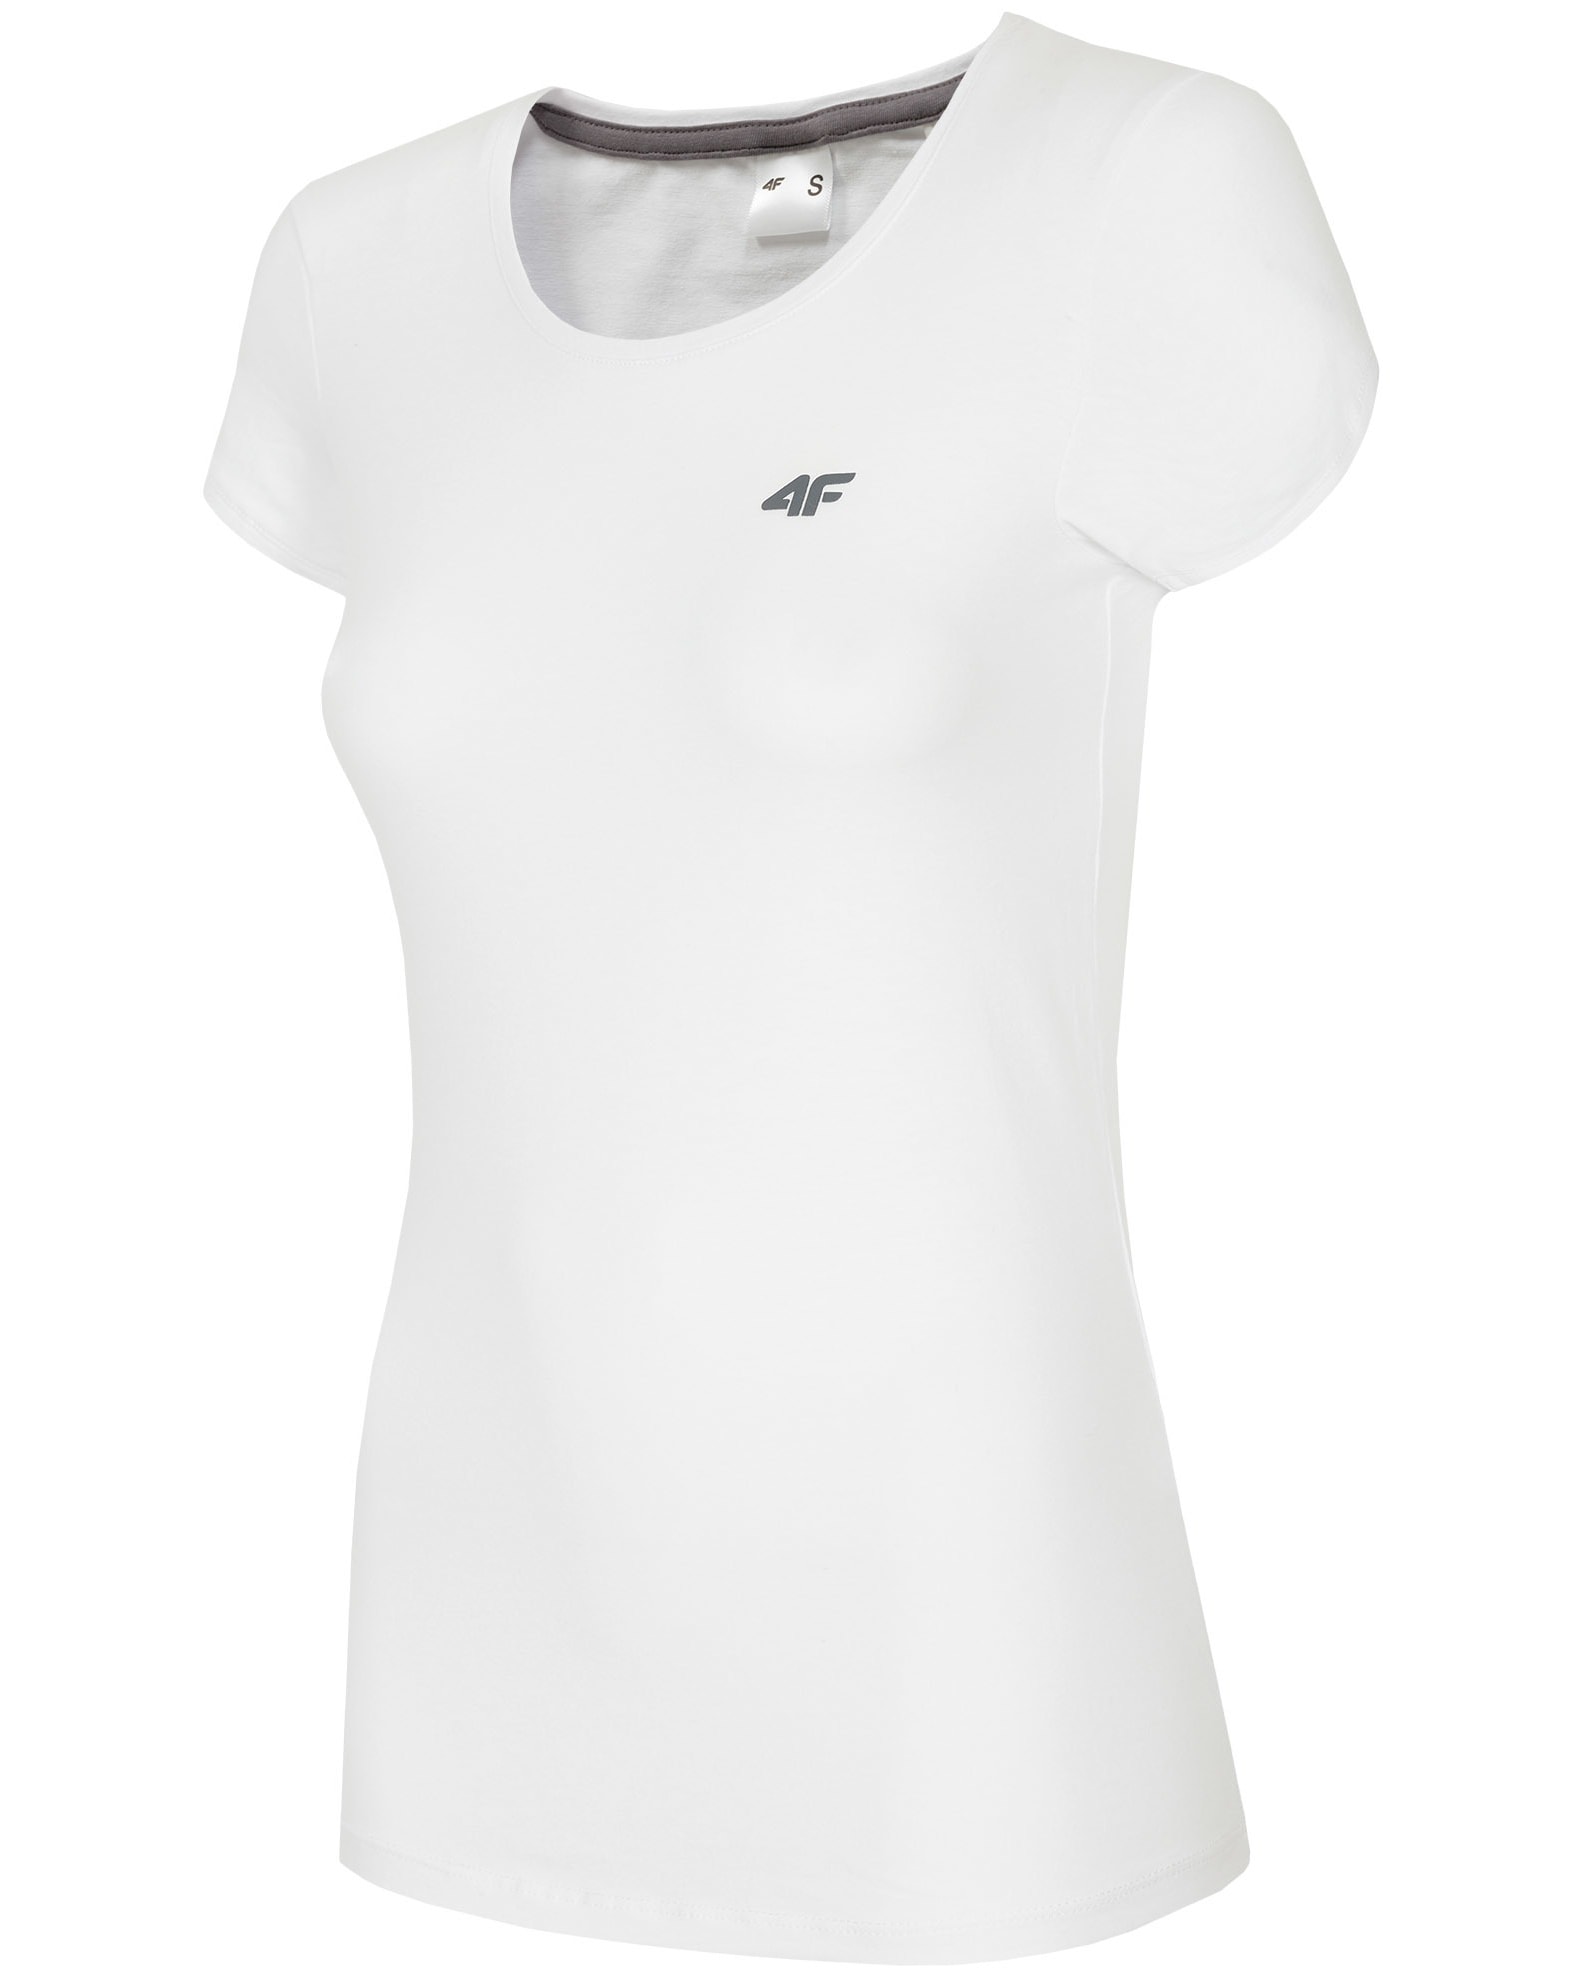 4F Women's T-Shirt - White